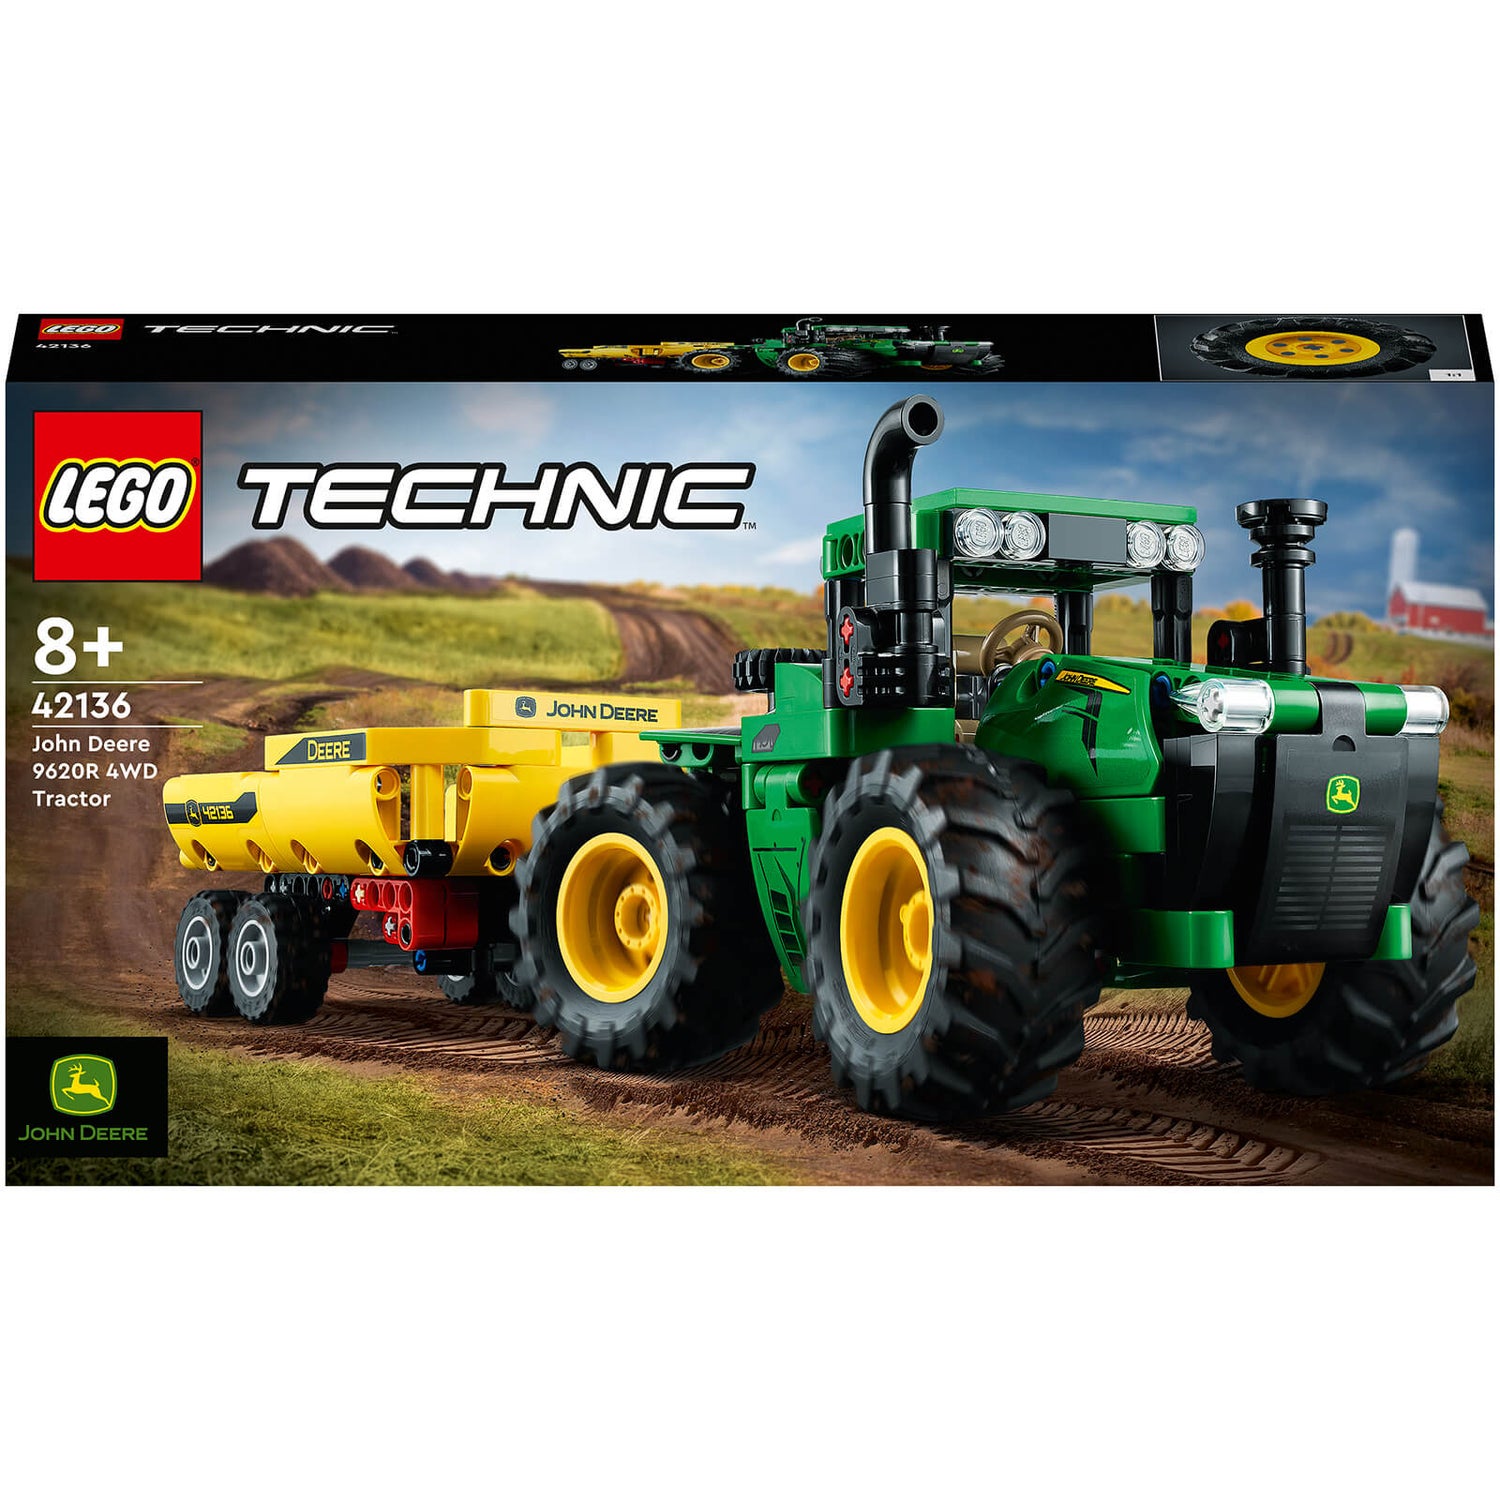 LEGO Technic: John Deere 9620R 4WD Tractor Farm Toy (42136)